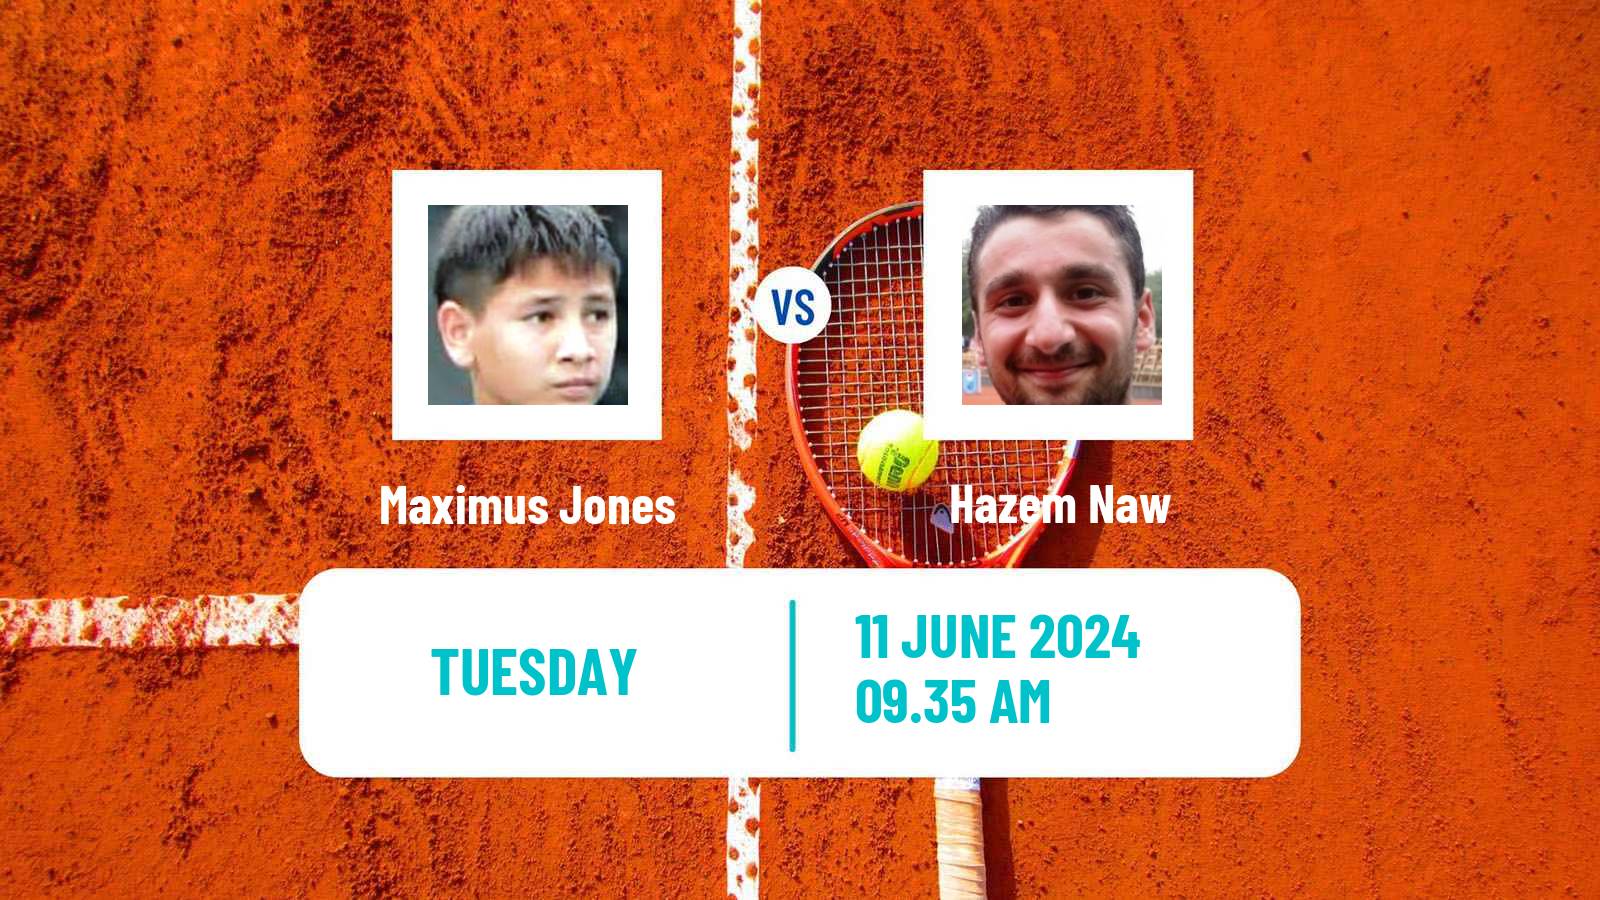 Tennis Davis Cup Group III Maximus Jones - Hazem Naw